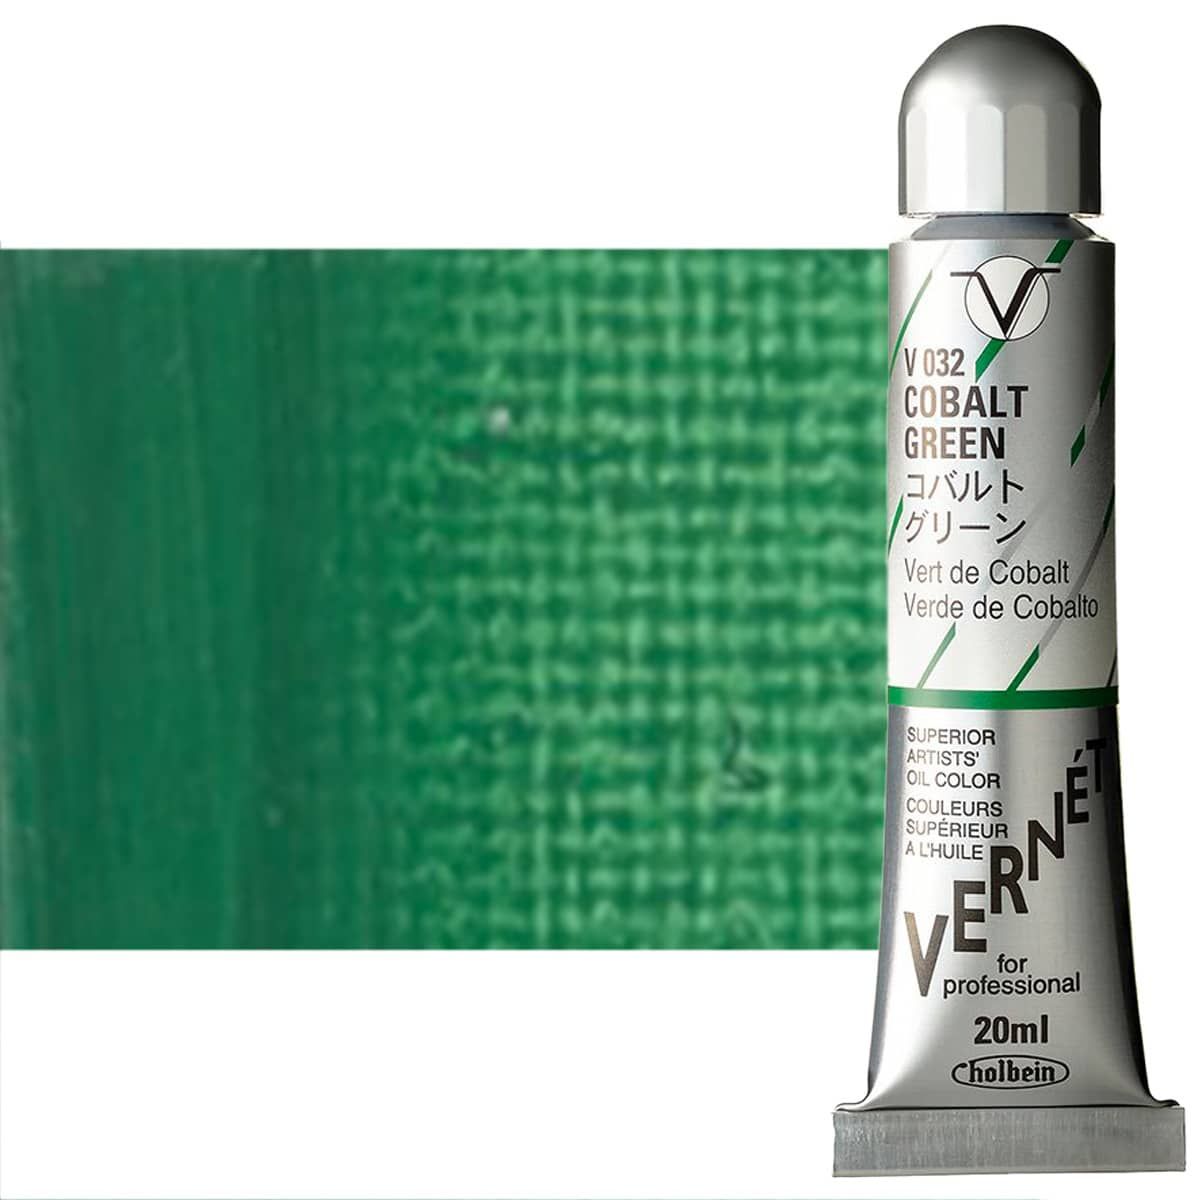 Holbein Vern?t Oil Color 20 ml Tube - Cobalt Green